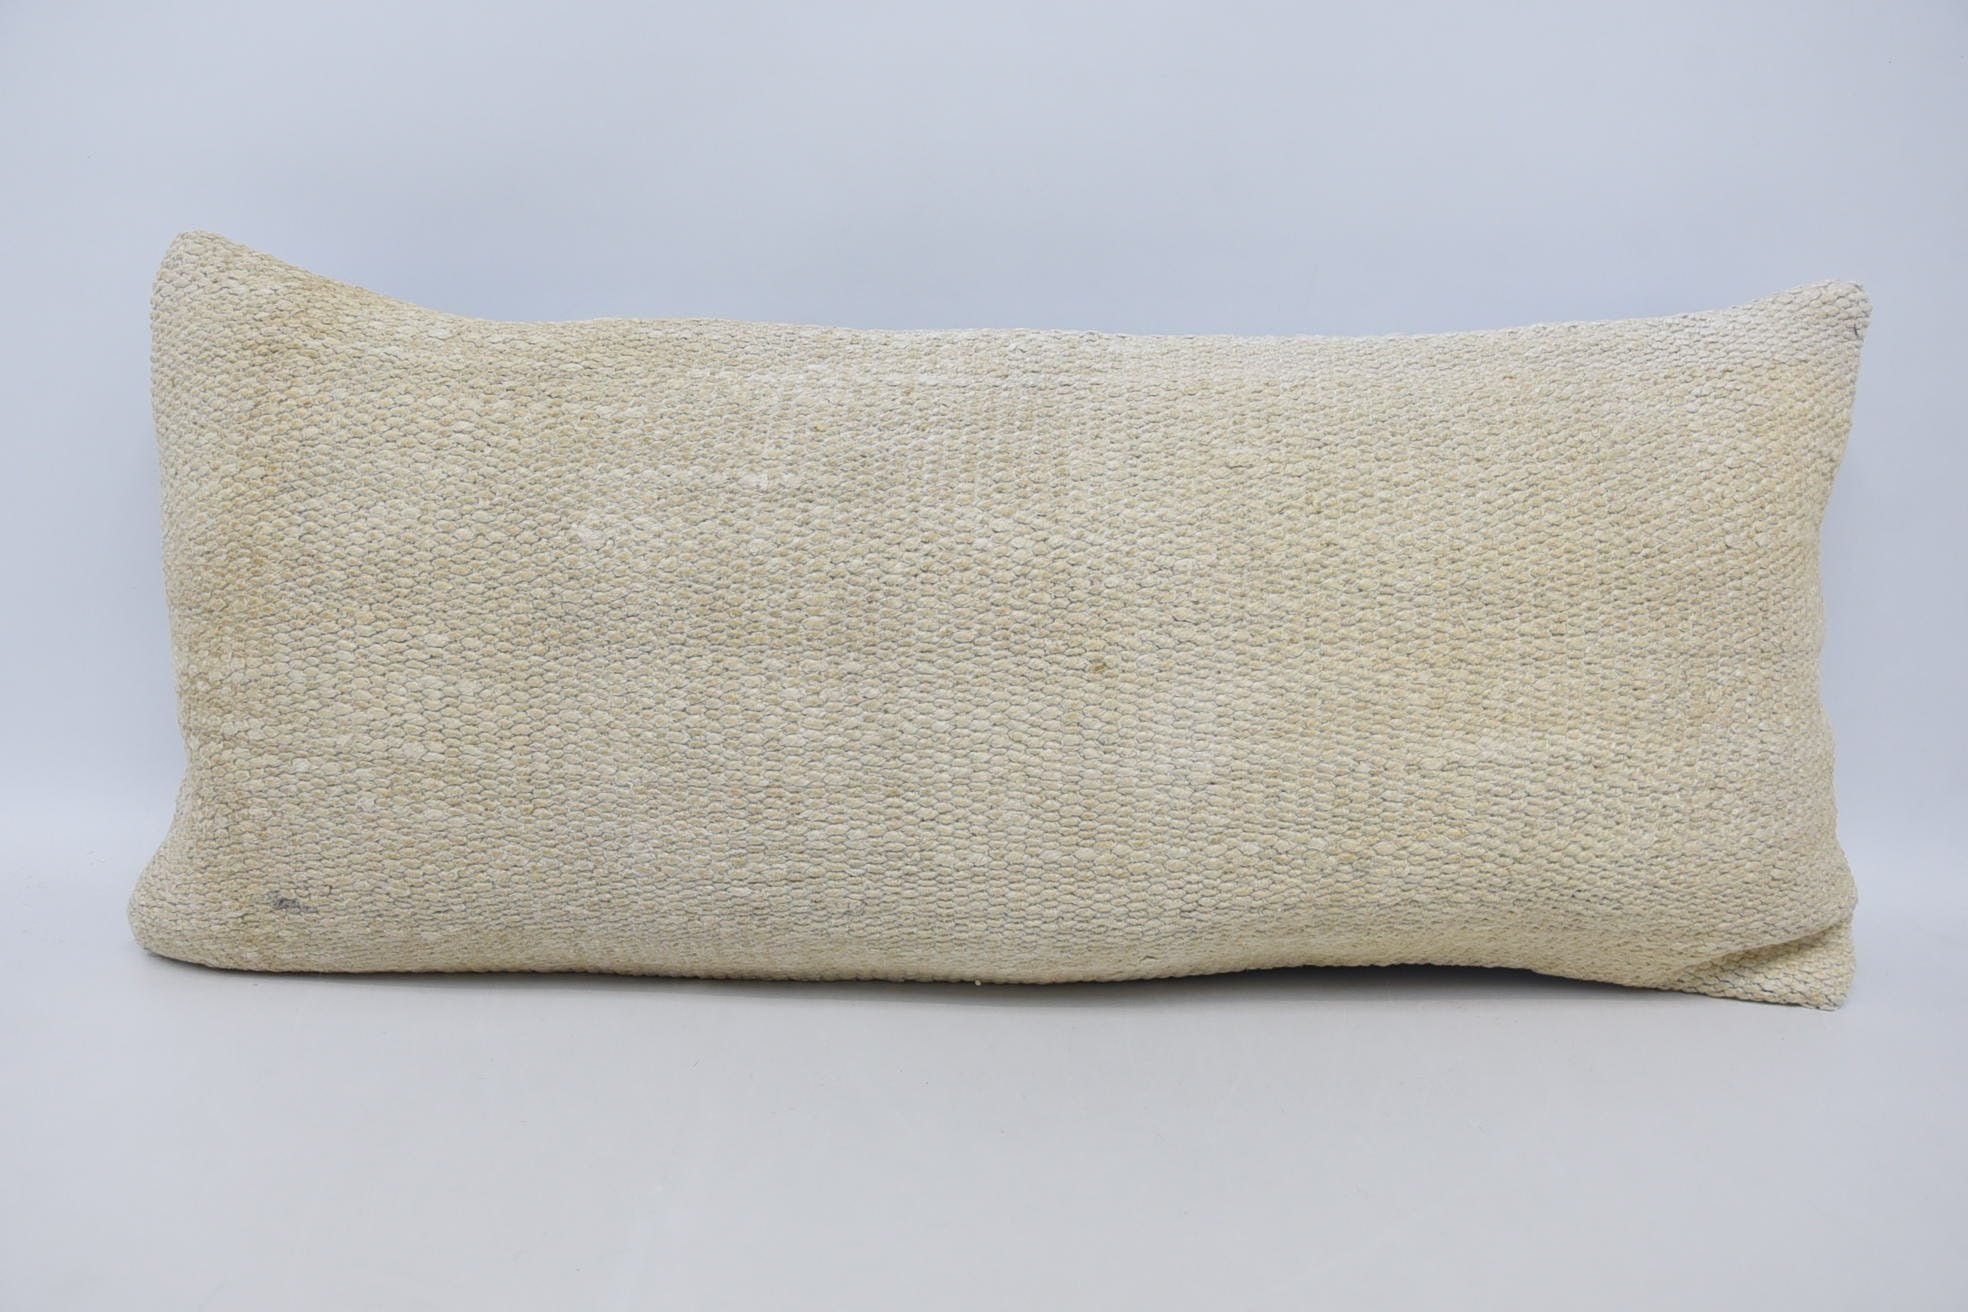 Pillow for Sofa, 16"x36" White Pillow, Bed Pillow Cover, Retro Pillow Cover, Antique Pillows, Throw Kilim Pillow